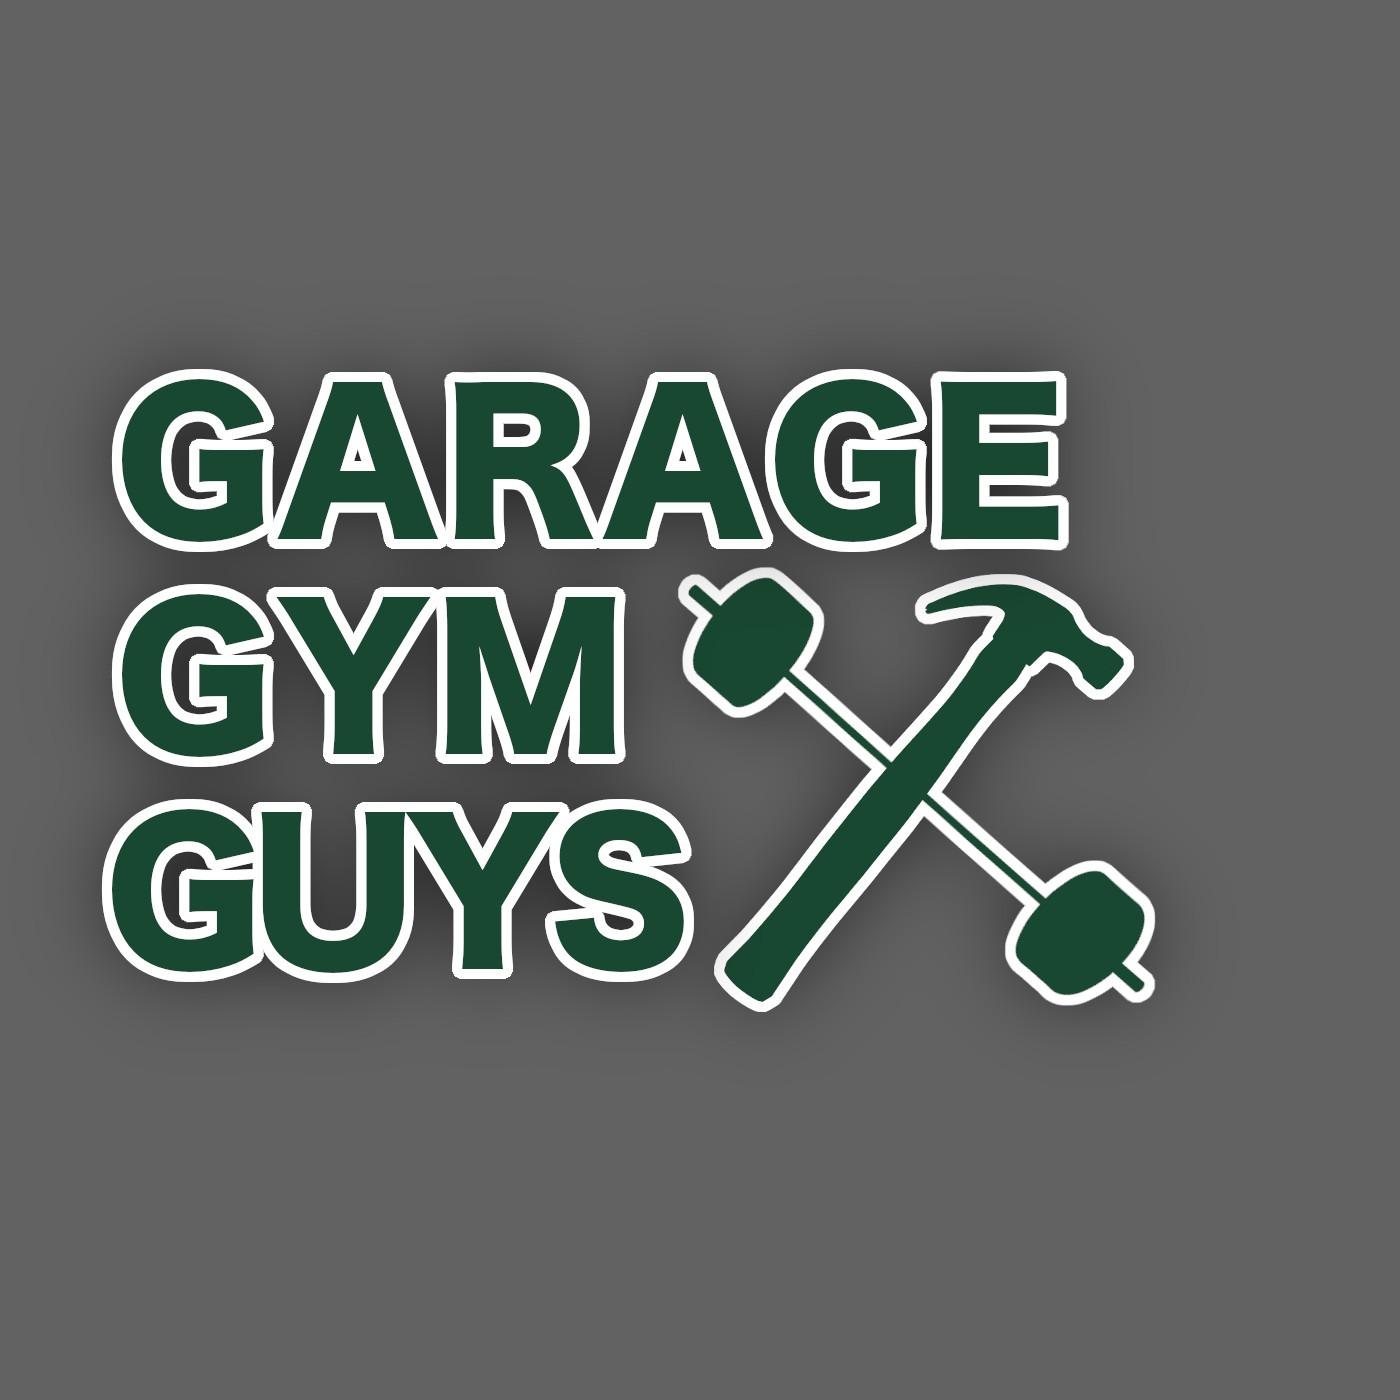 Garage Gym Guys